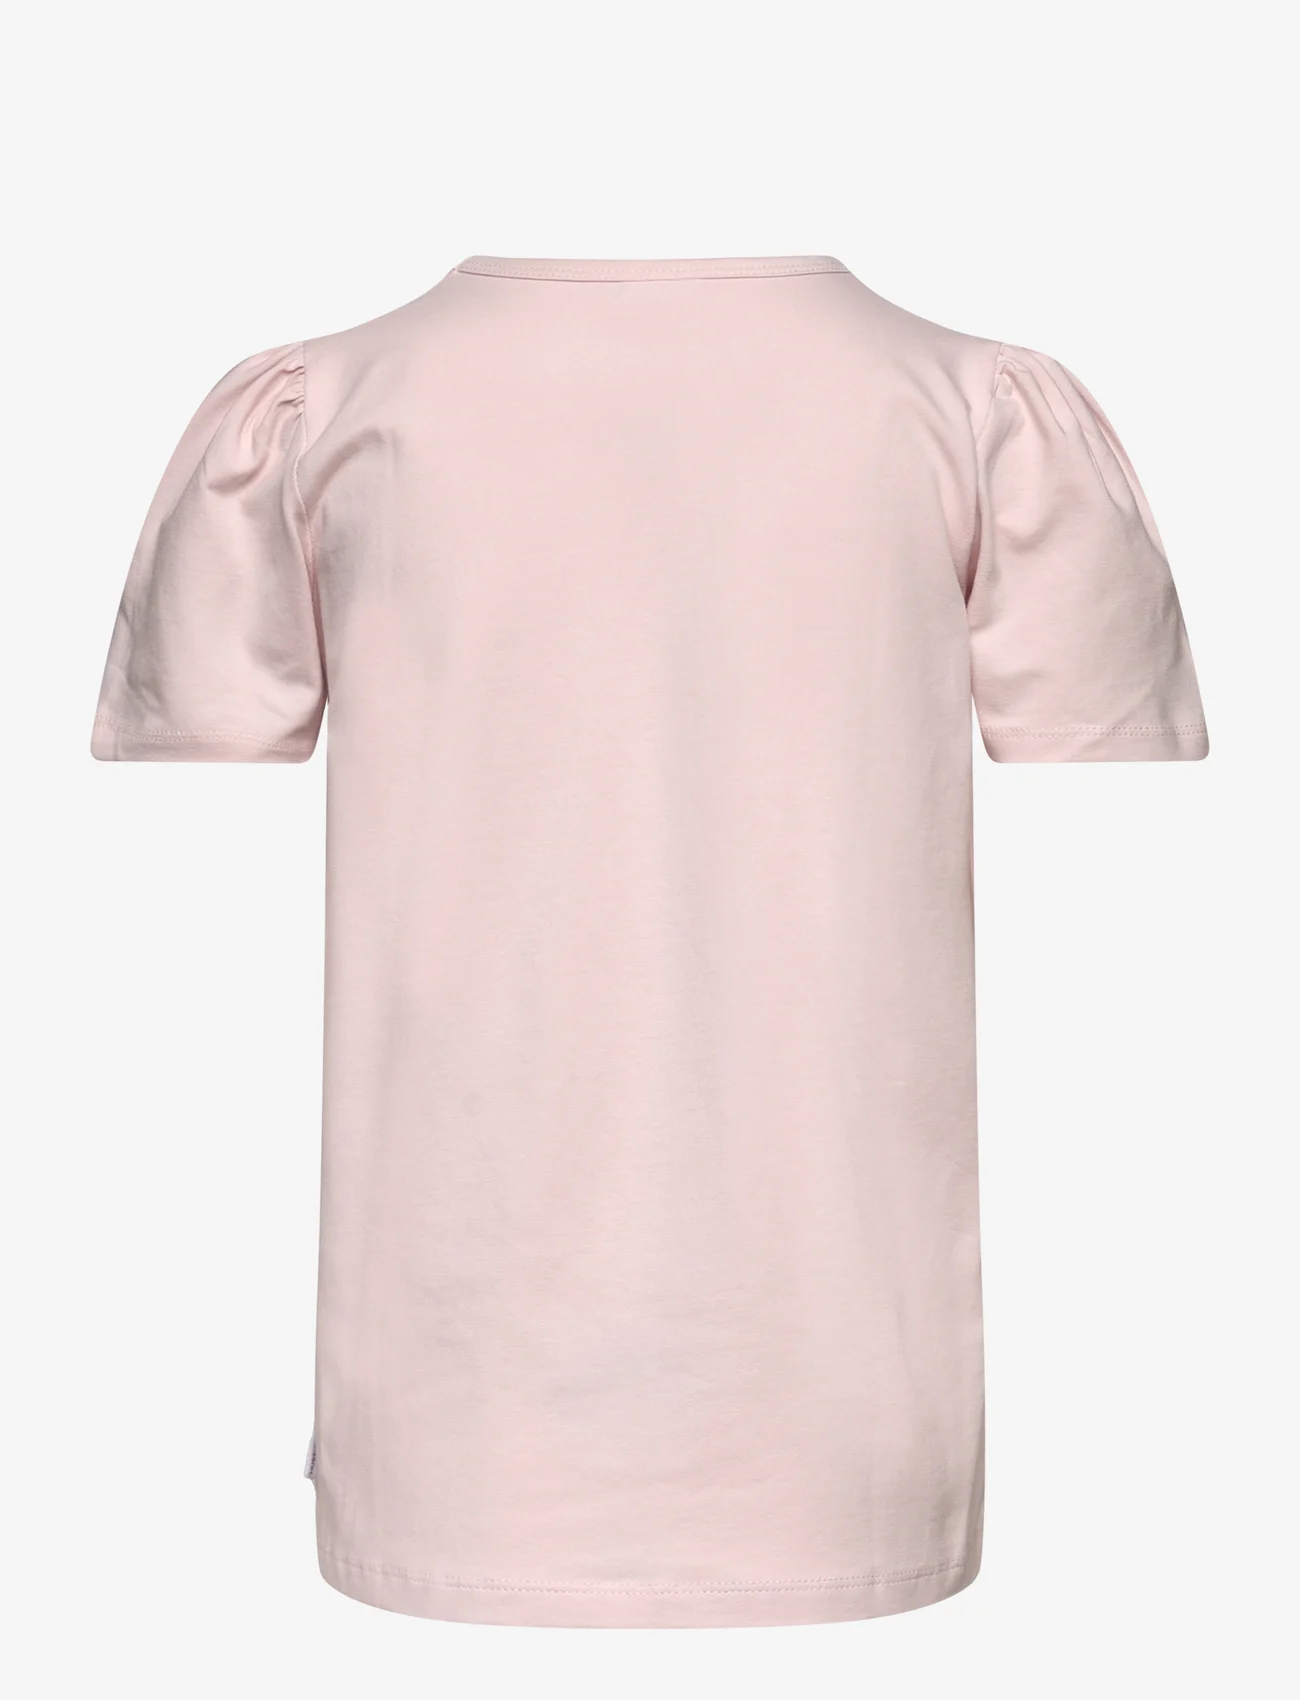 Hust & Claire - Amna - T-shirt - marškinėliai trumpomis rankovėmis - rose morn - 1